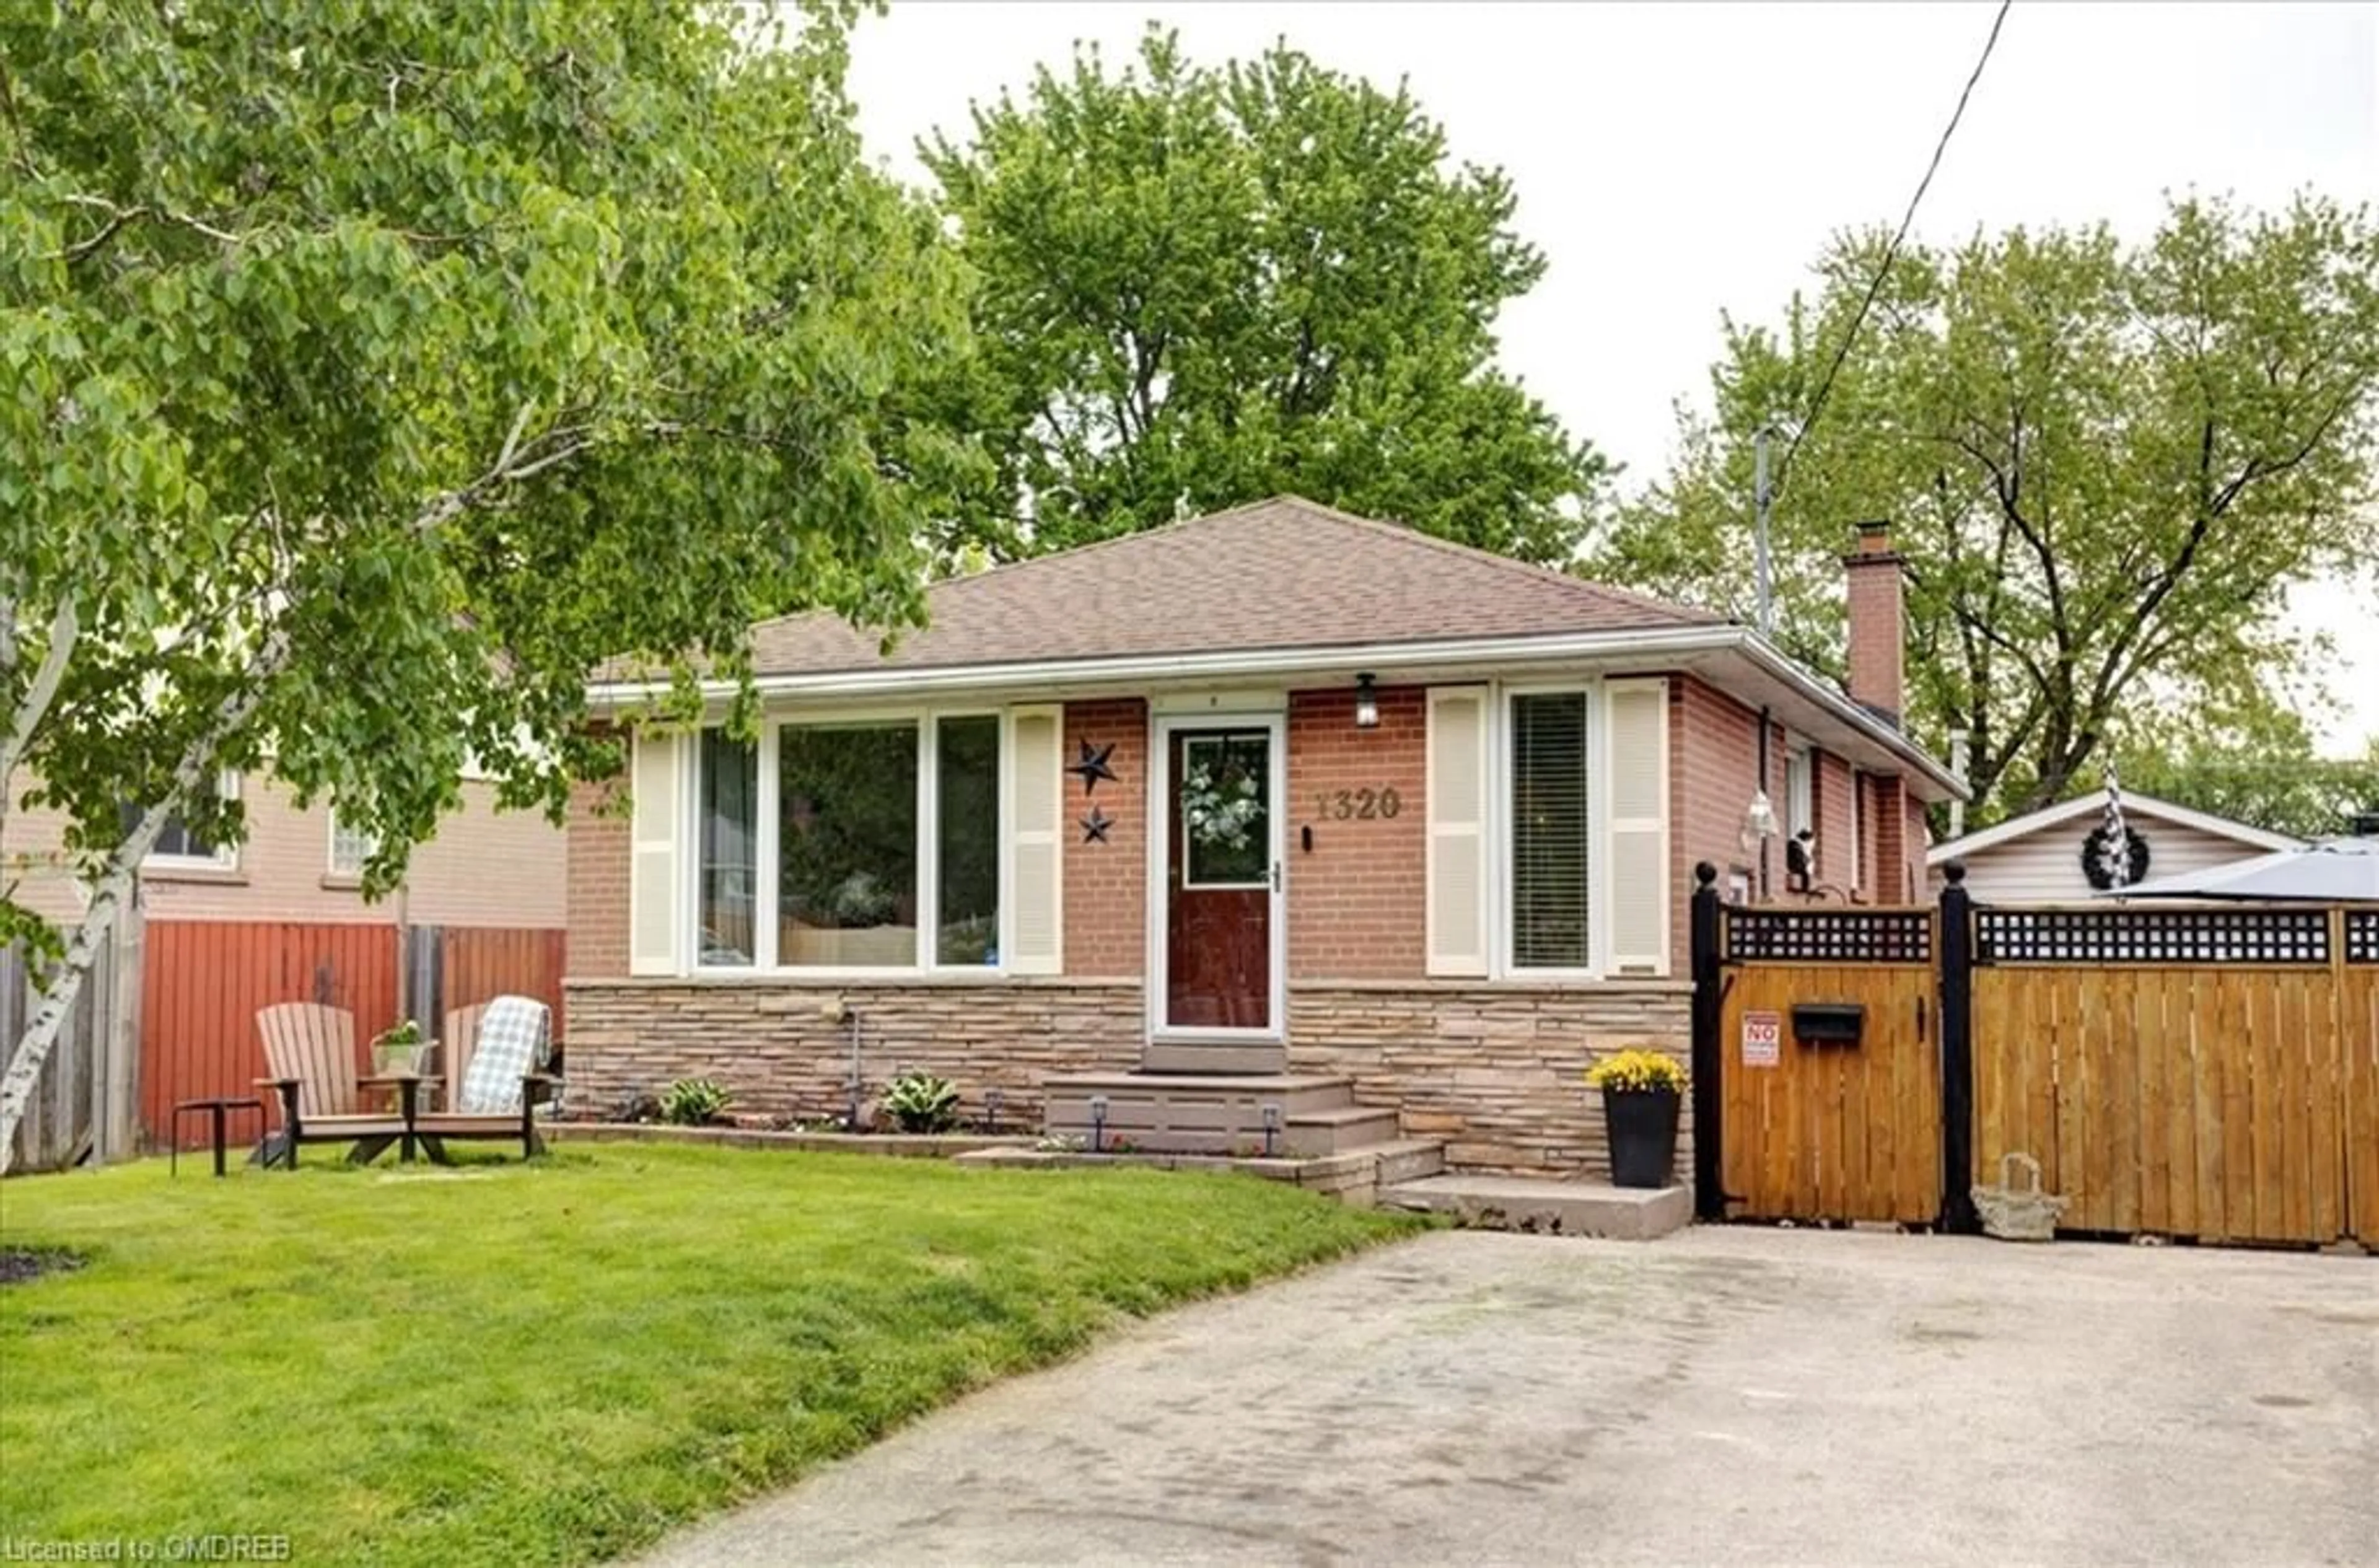 Home with brick exterior material for 1320 Bunnell Dr, Burlington Ontario L7P 2E1